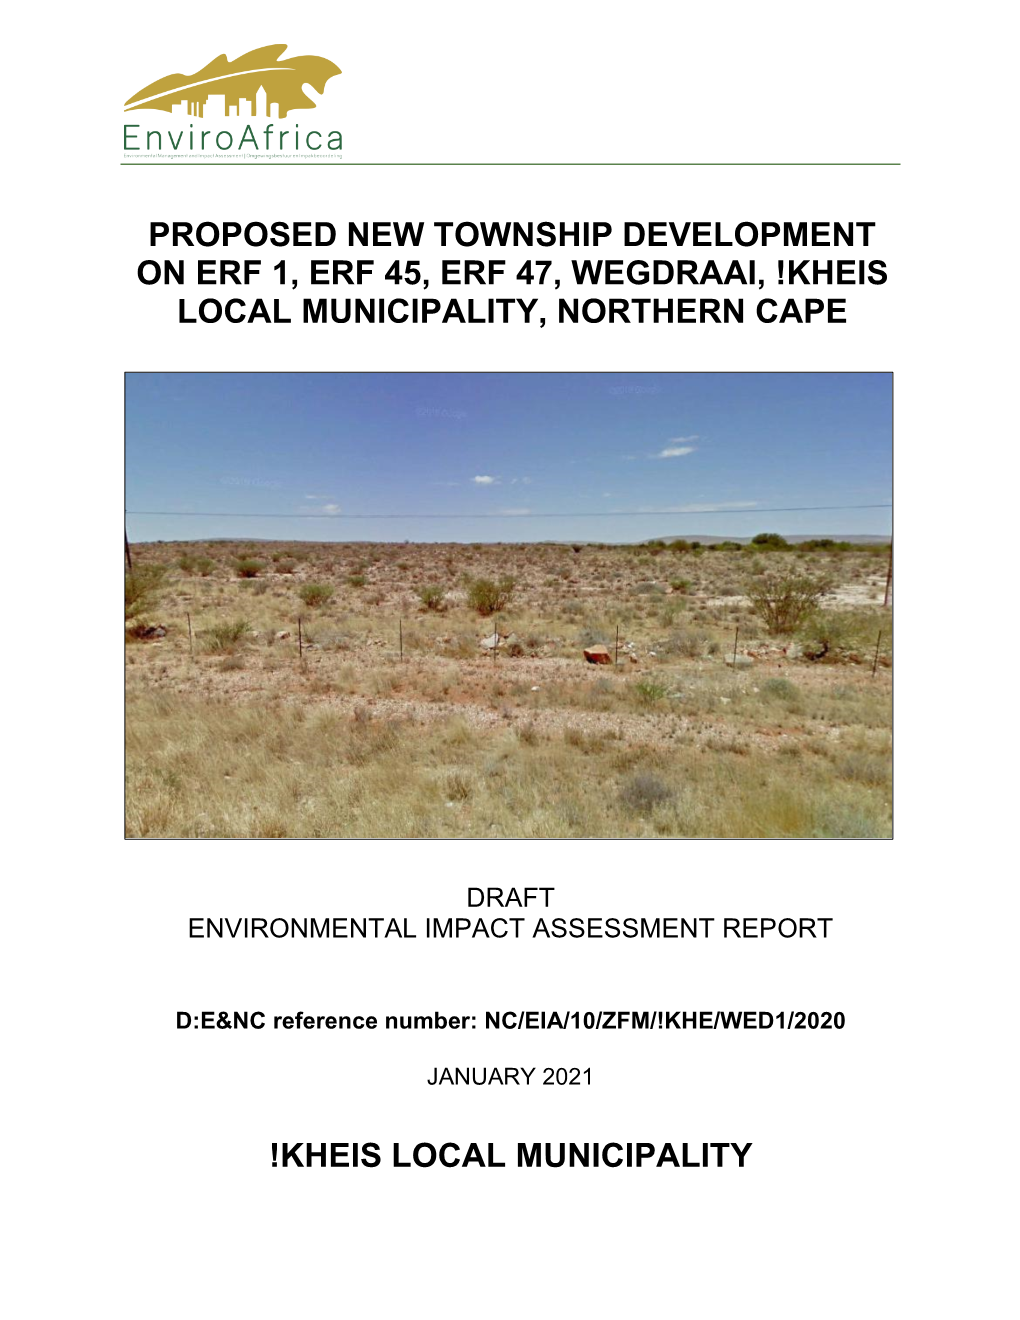 Kheis Local Municipality, Northern Cape